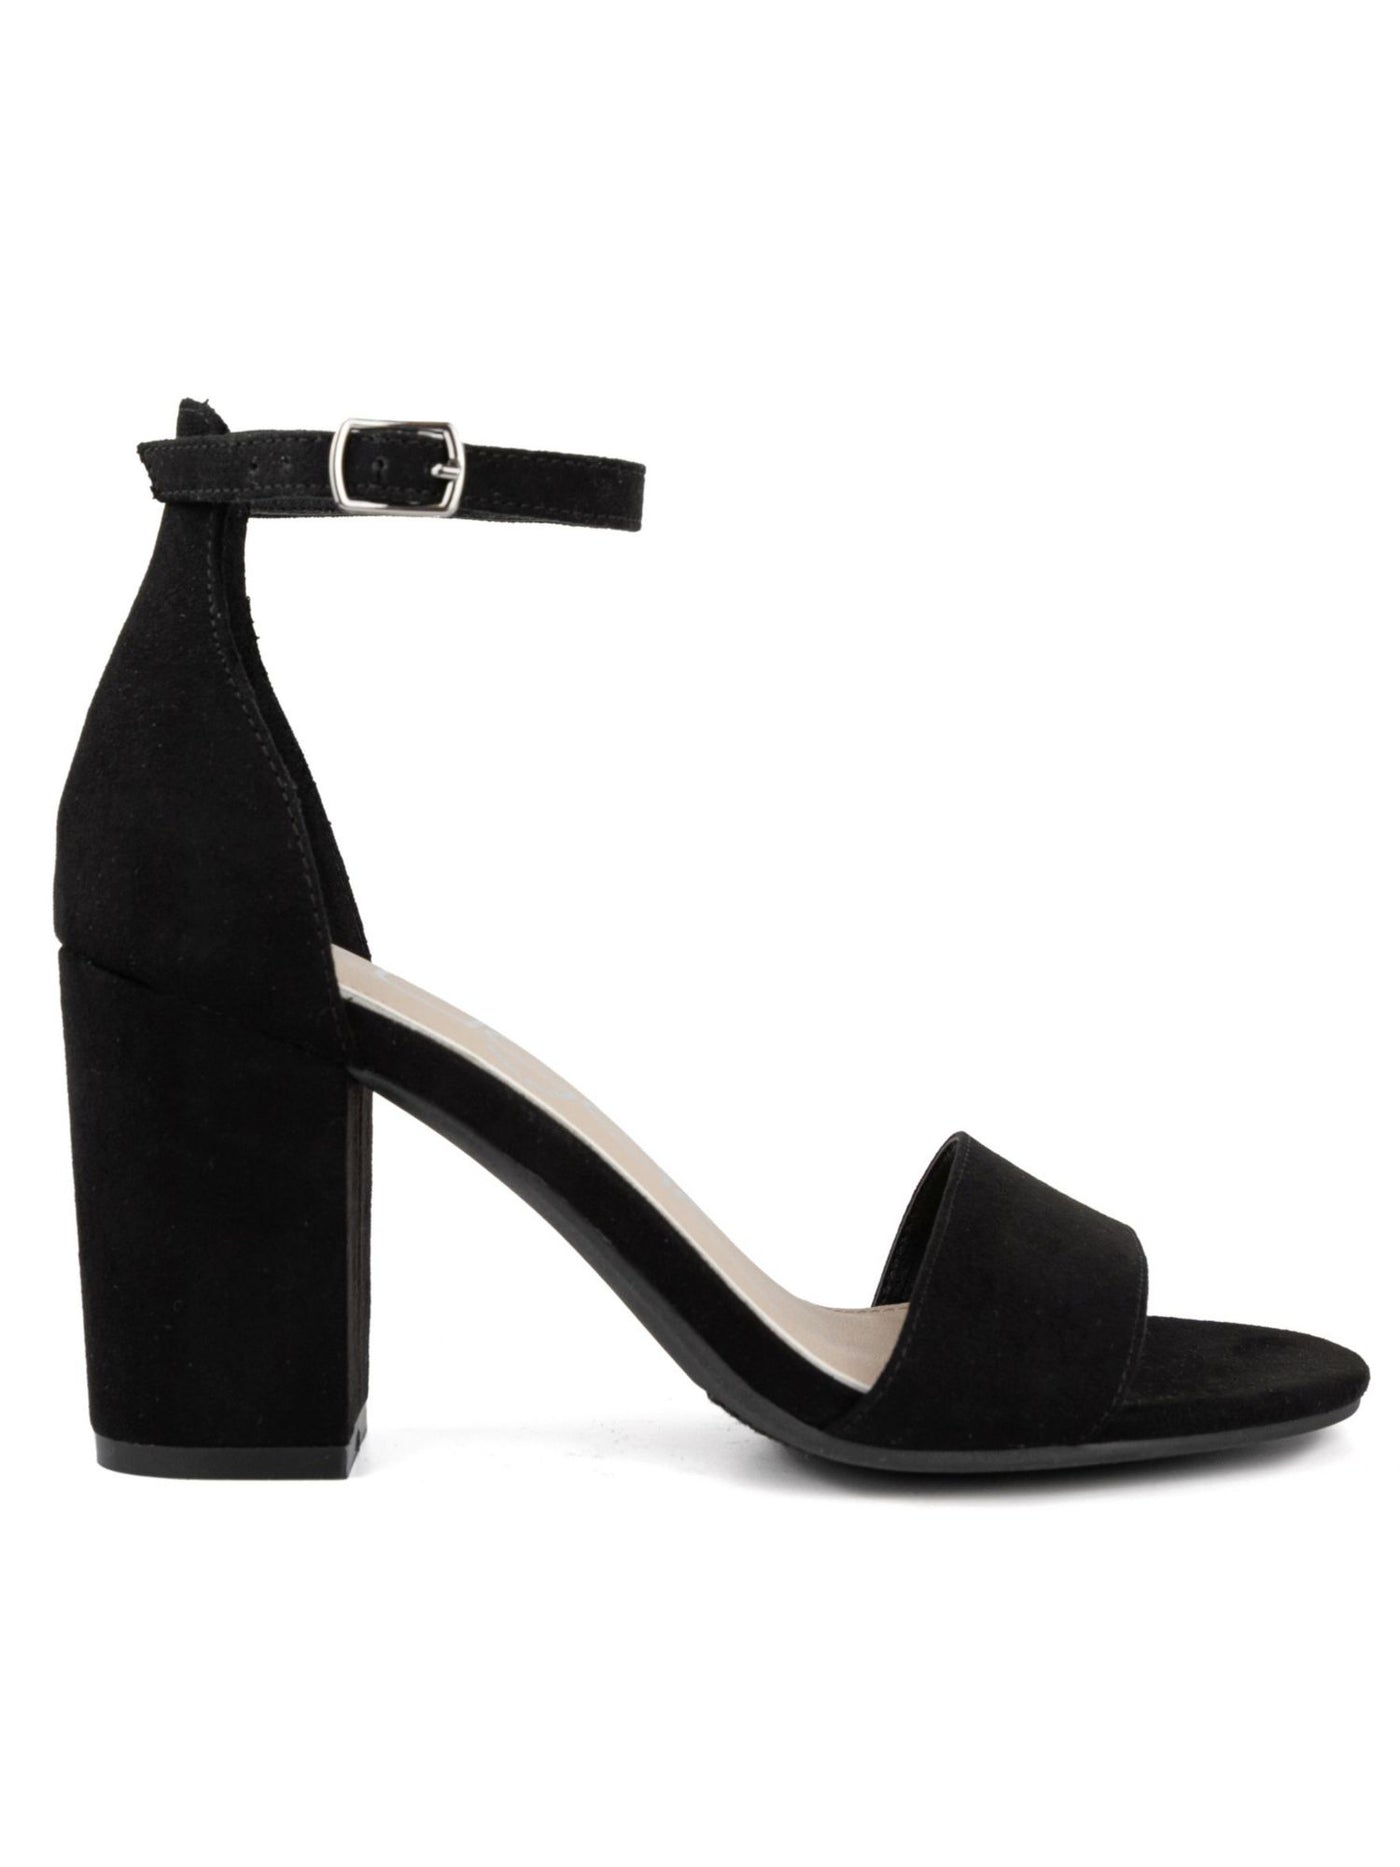 SUGAR Womens Black Padded Adjustable Ankle Strap Machelene Open Toe Block Heel Buckle Dress Sandals Shoes 9 M